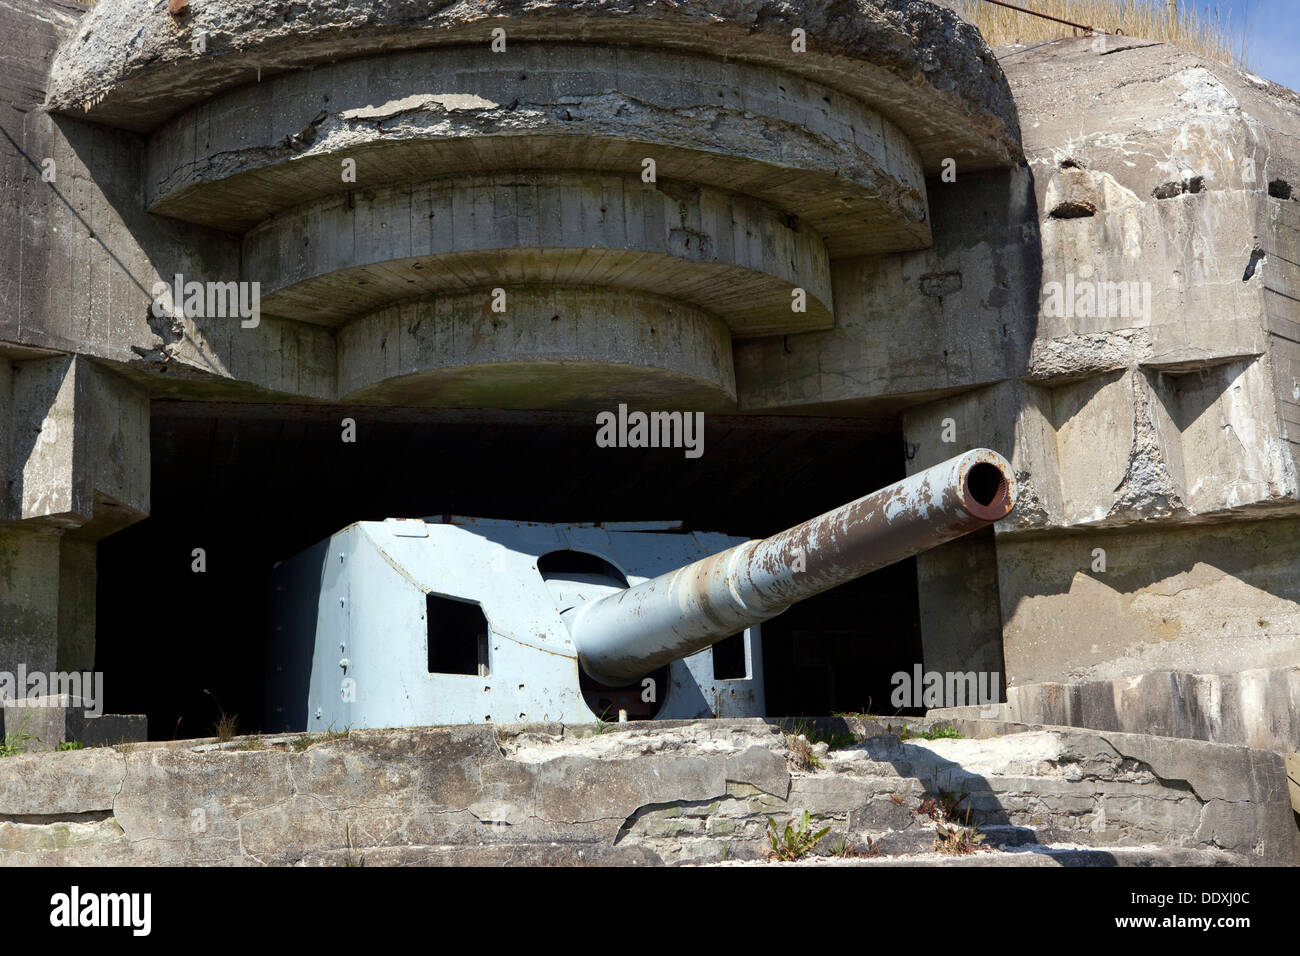 WW2 bunker a cannone Bangsbo, Danimarca. Foto Stock